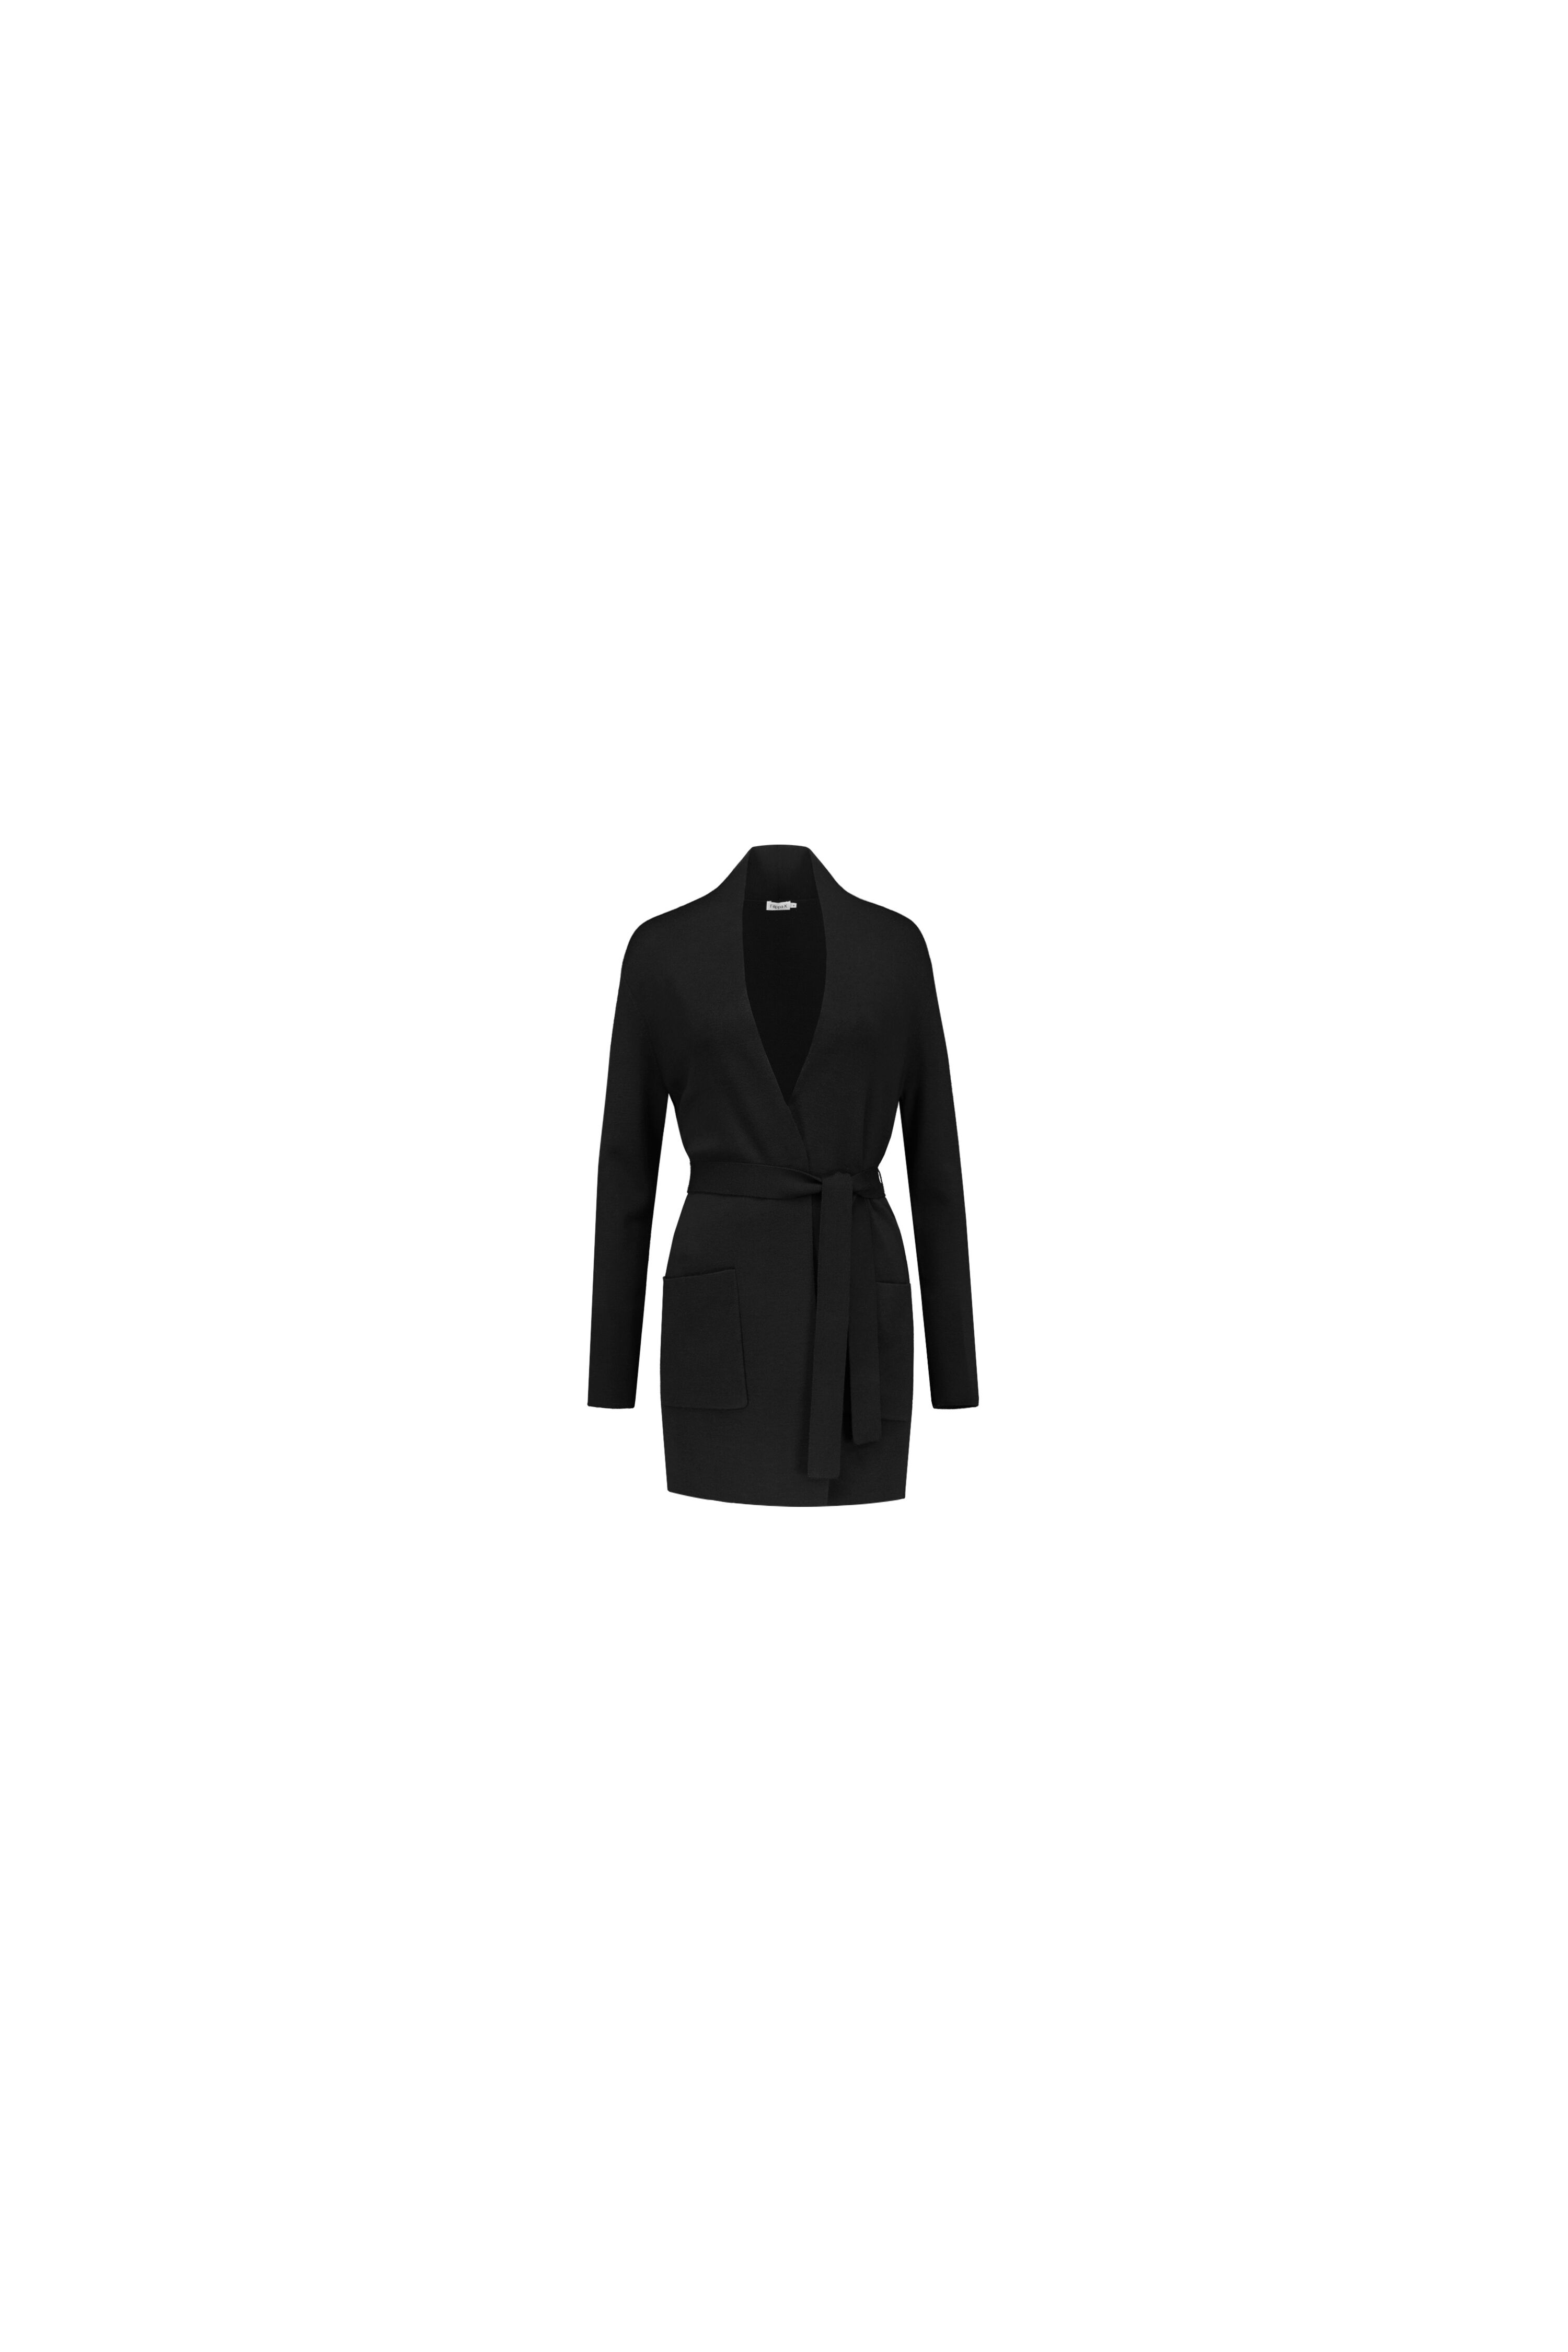 Filippa K Belted Mid Cardigan Black - 25935 1433 | Bloom Fashion